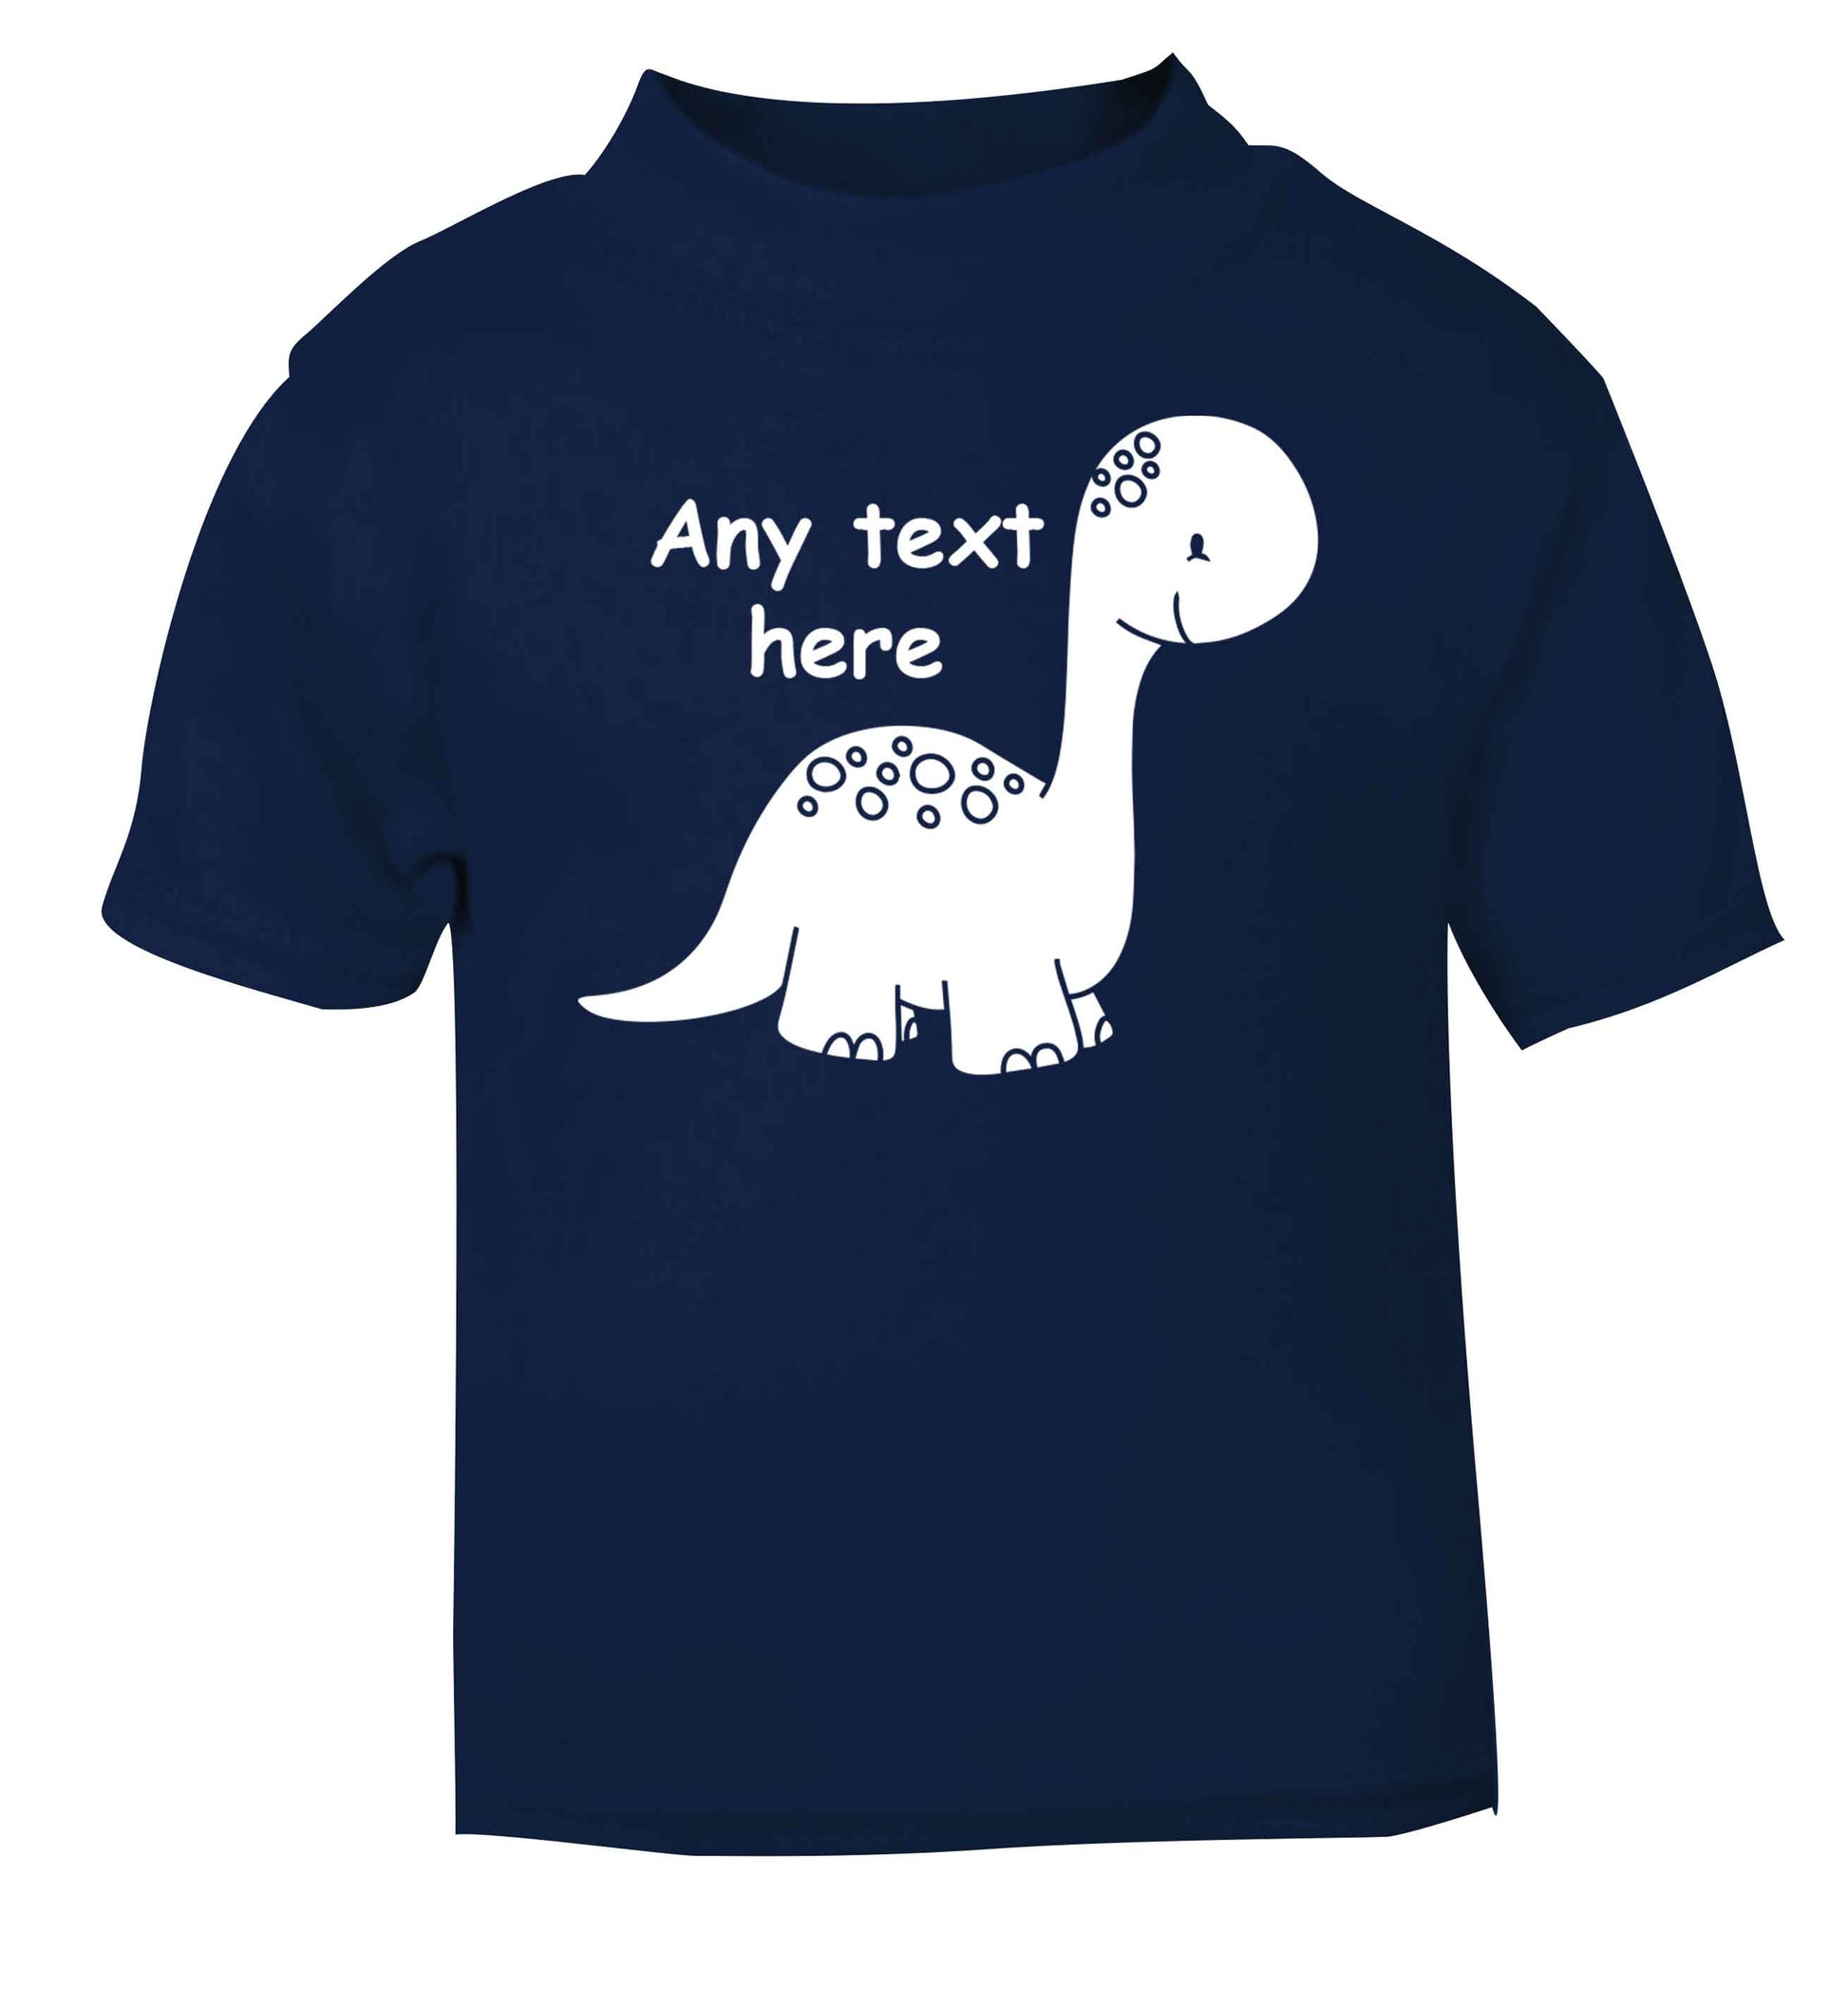 Dinosaur any text navy baby toddler Tshirt 2 Years